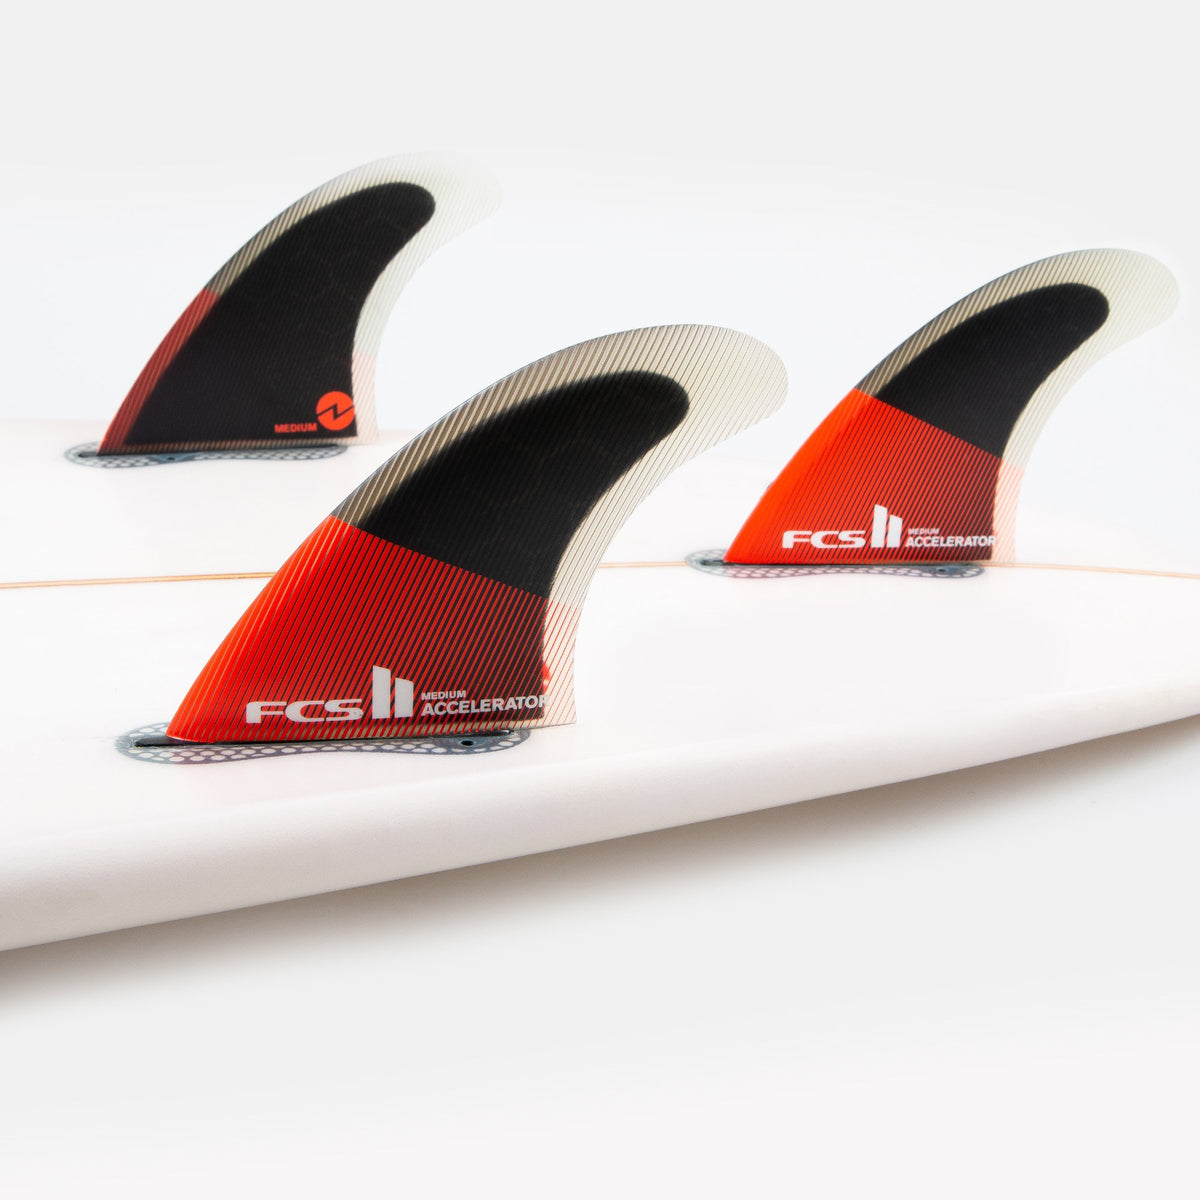 FCS-II-accelerator-large-thruster-surfboard-fins-red-PC-blacksheepsurf-ireland